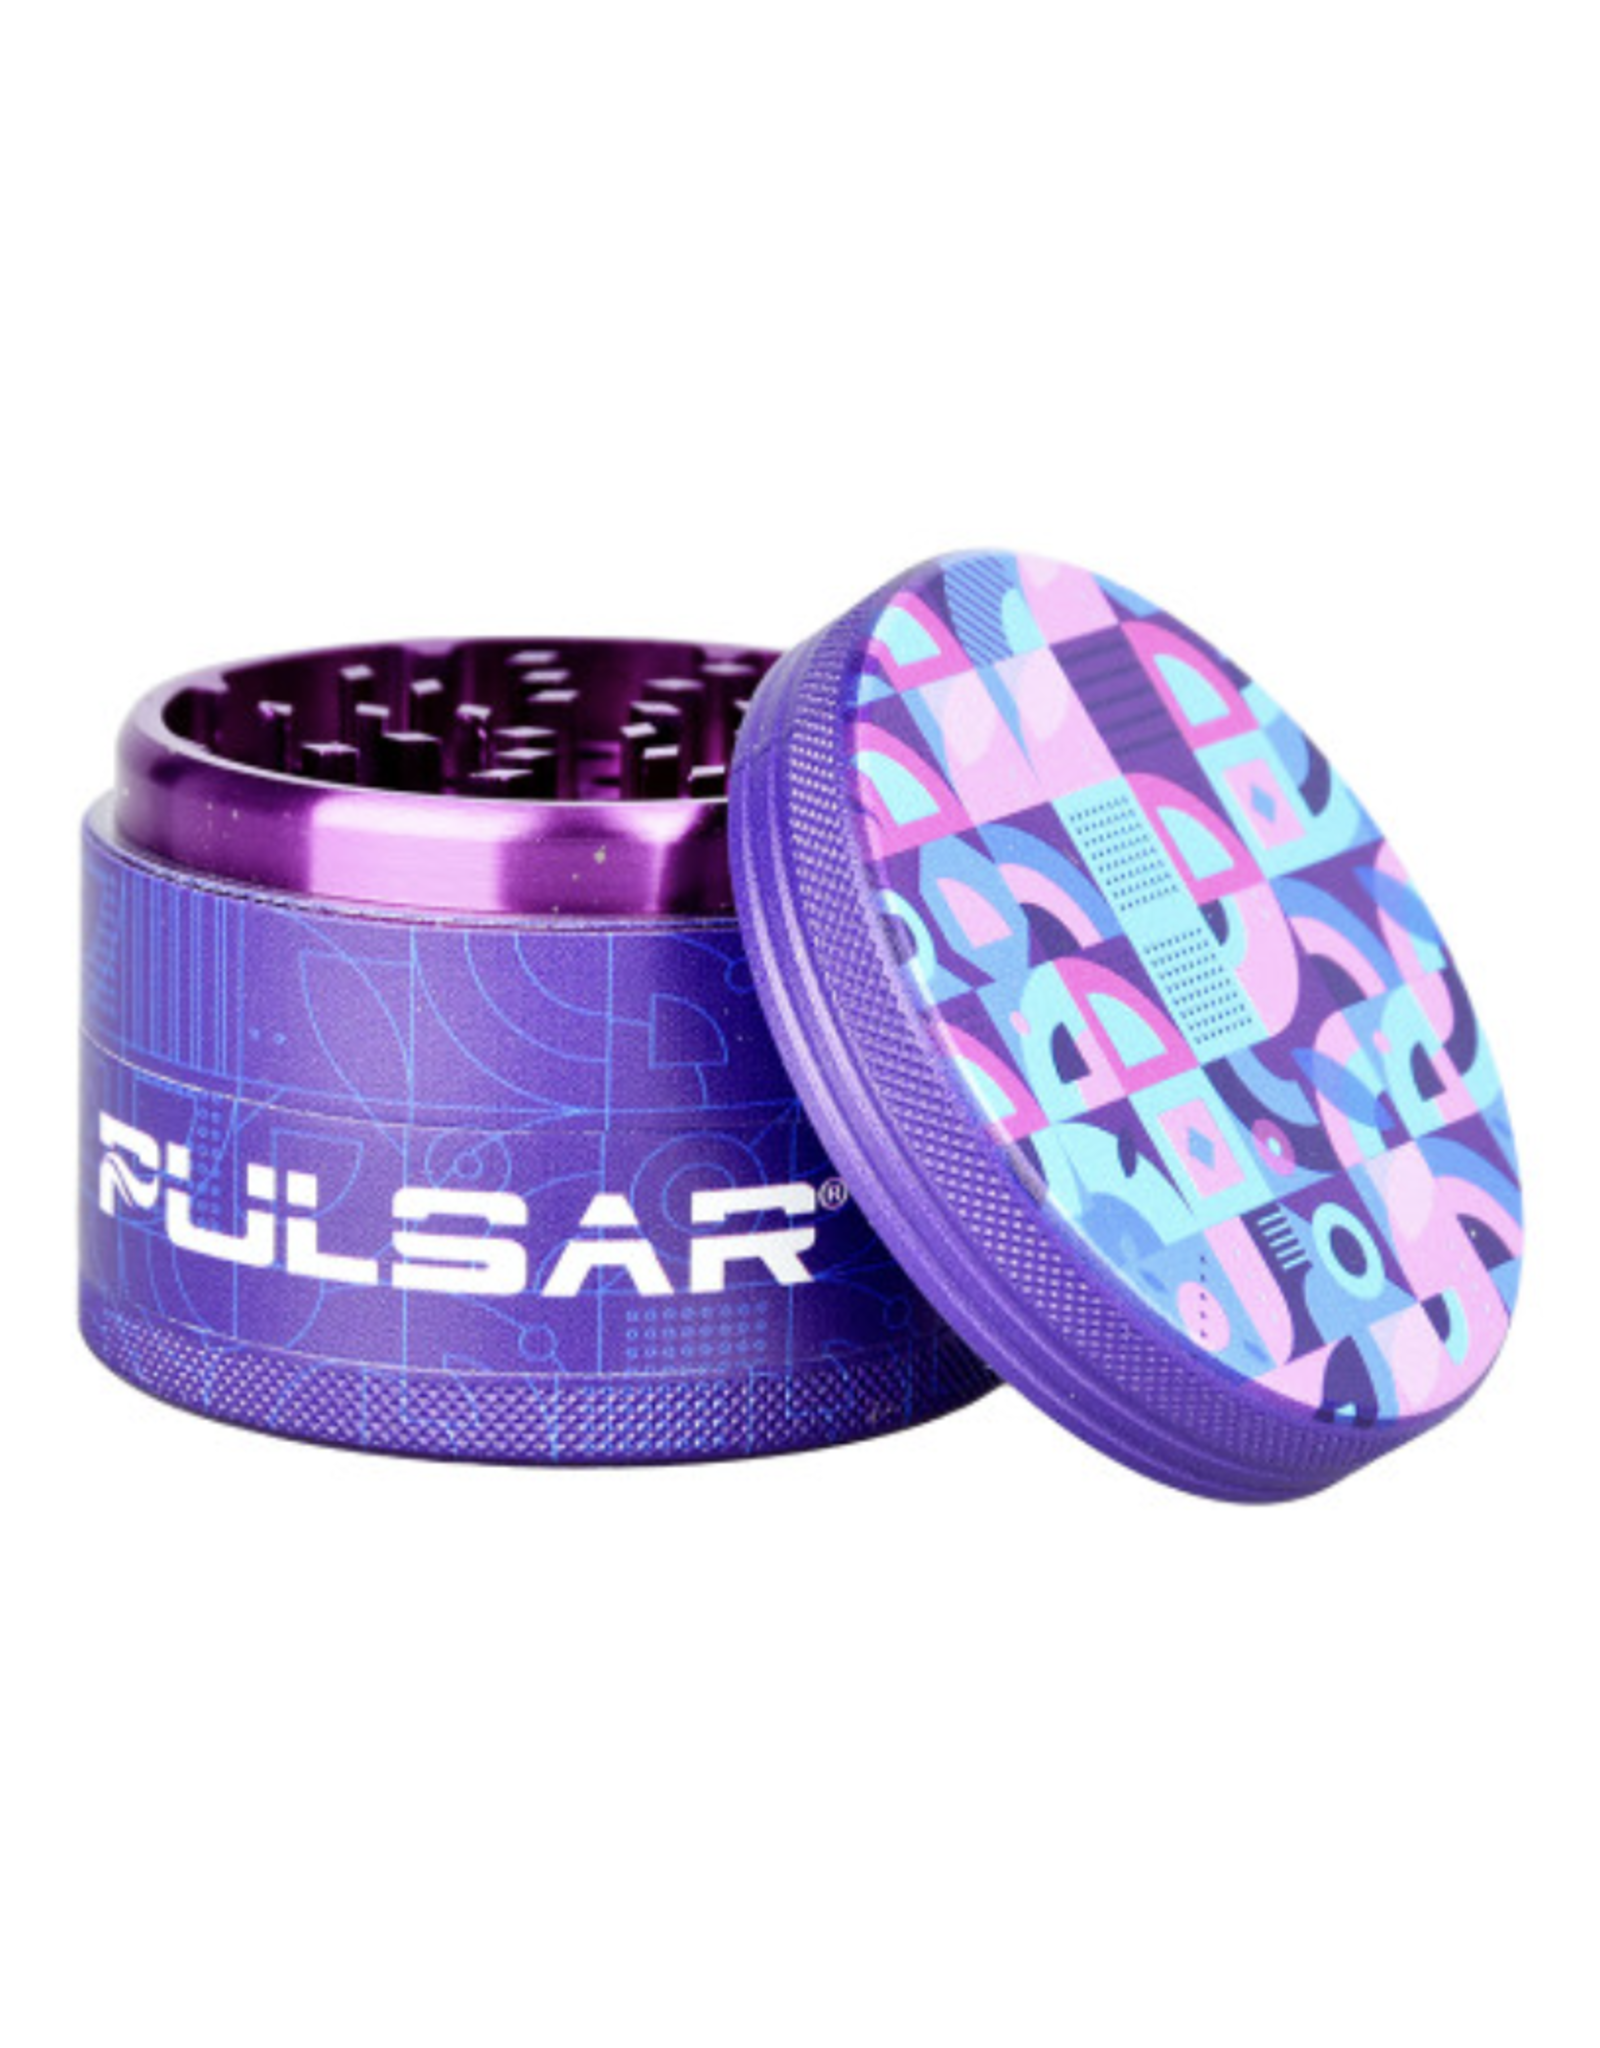 Pulsar Candy Floss 2.5" 4 Piece Grinder by Pulsar